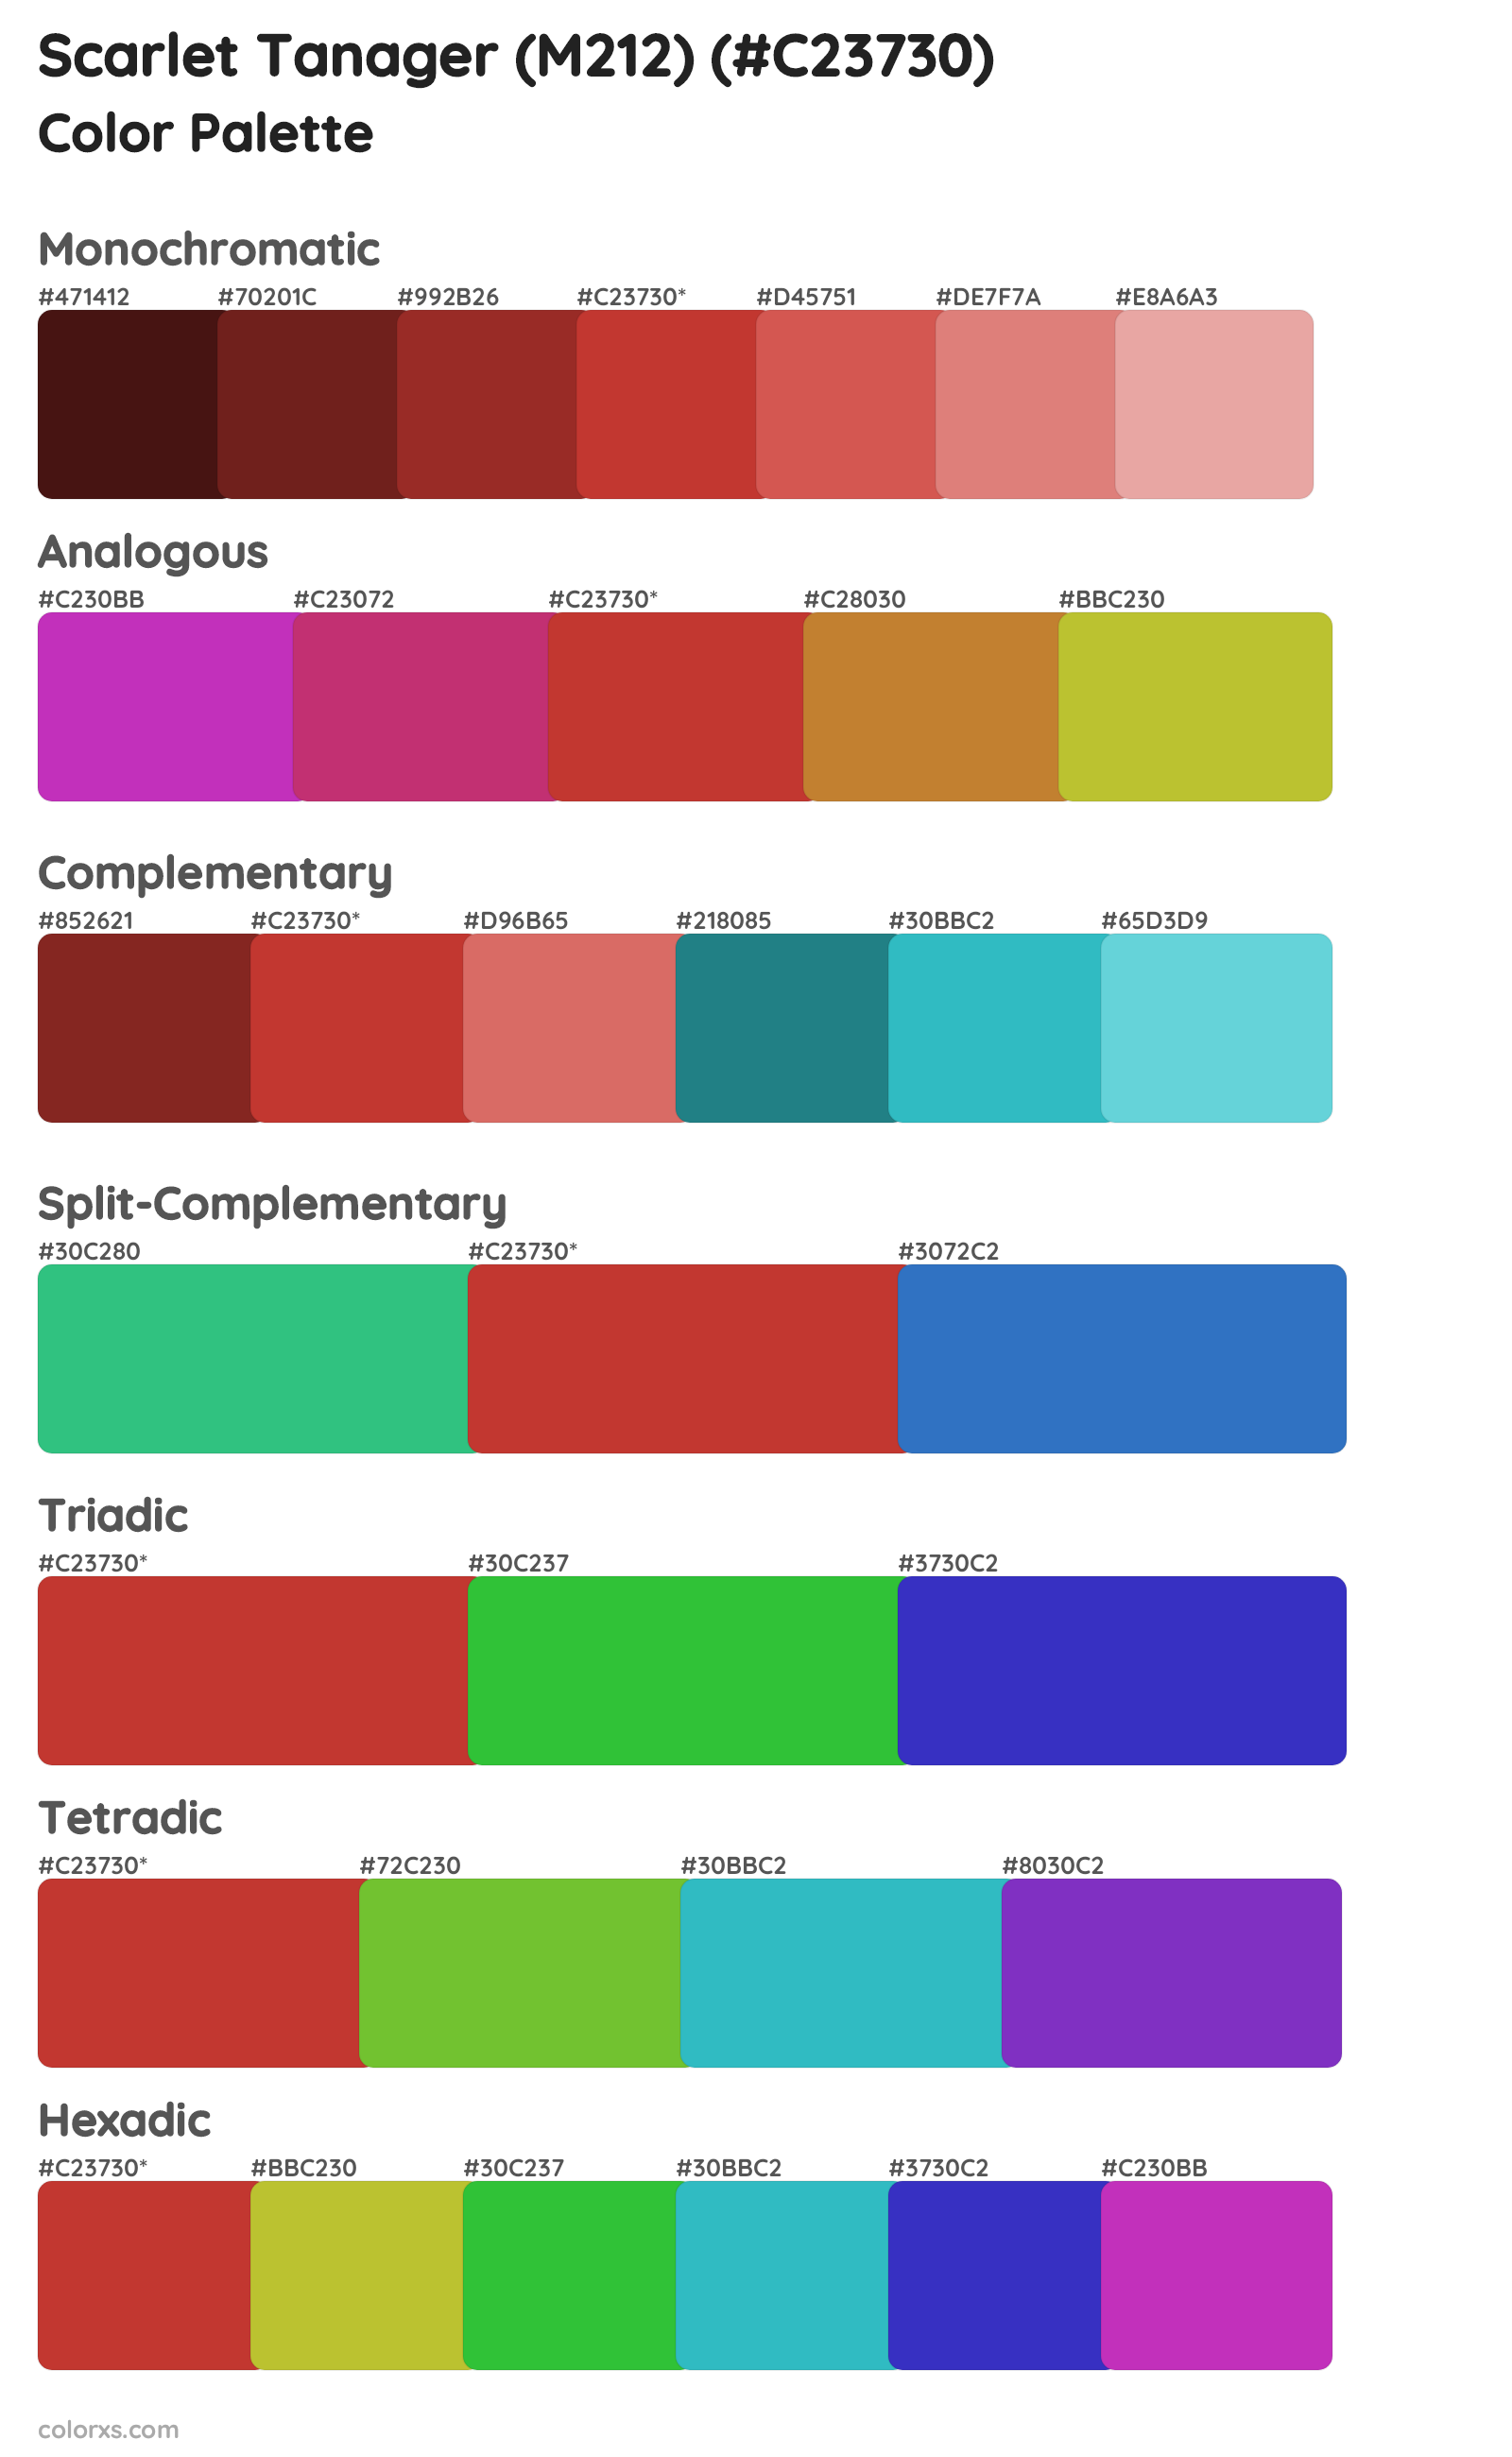 Scarlet Tanager (M212) Color Scheme Palettes